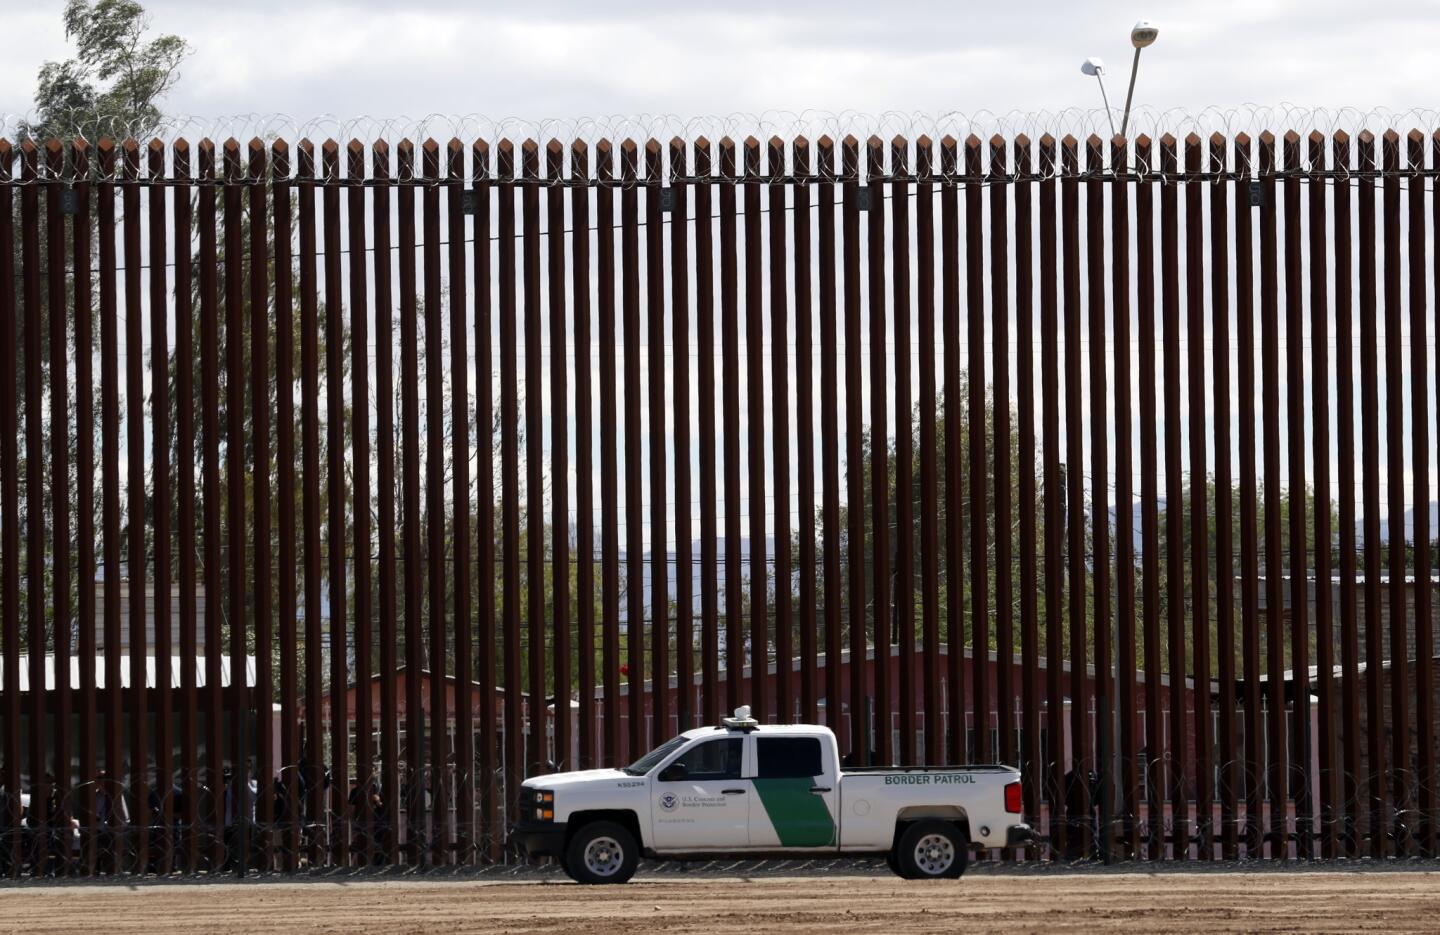 President Trump visits U.S.-Mexico border and Los Angeles